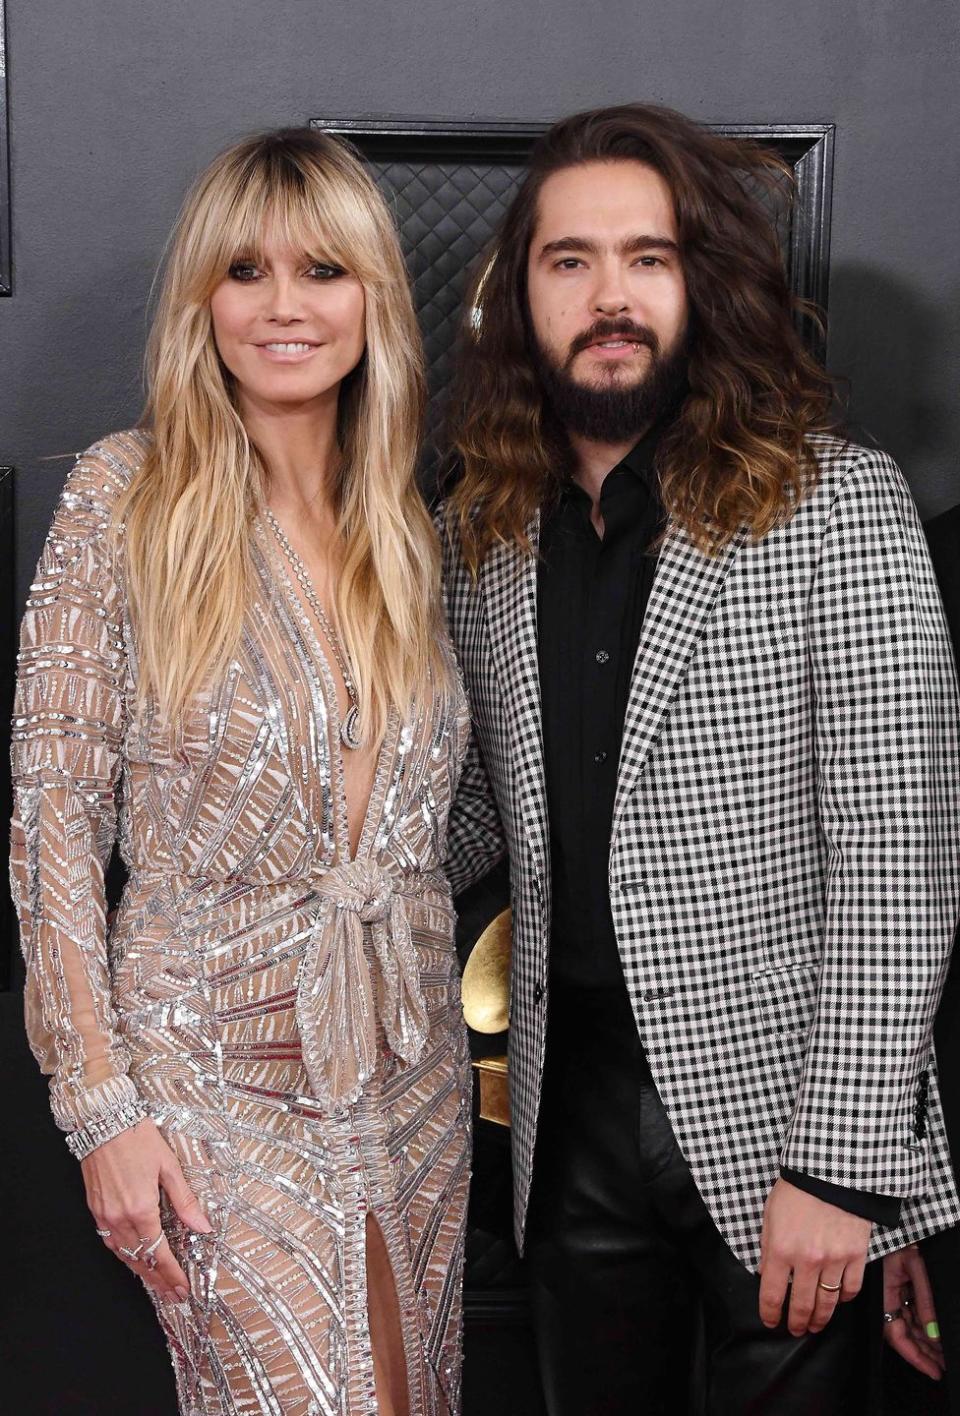 Grammy Awards cute couples - Heidi Klum and Tom Kaulitz